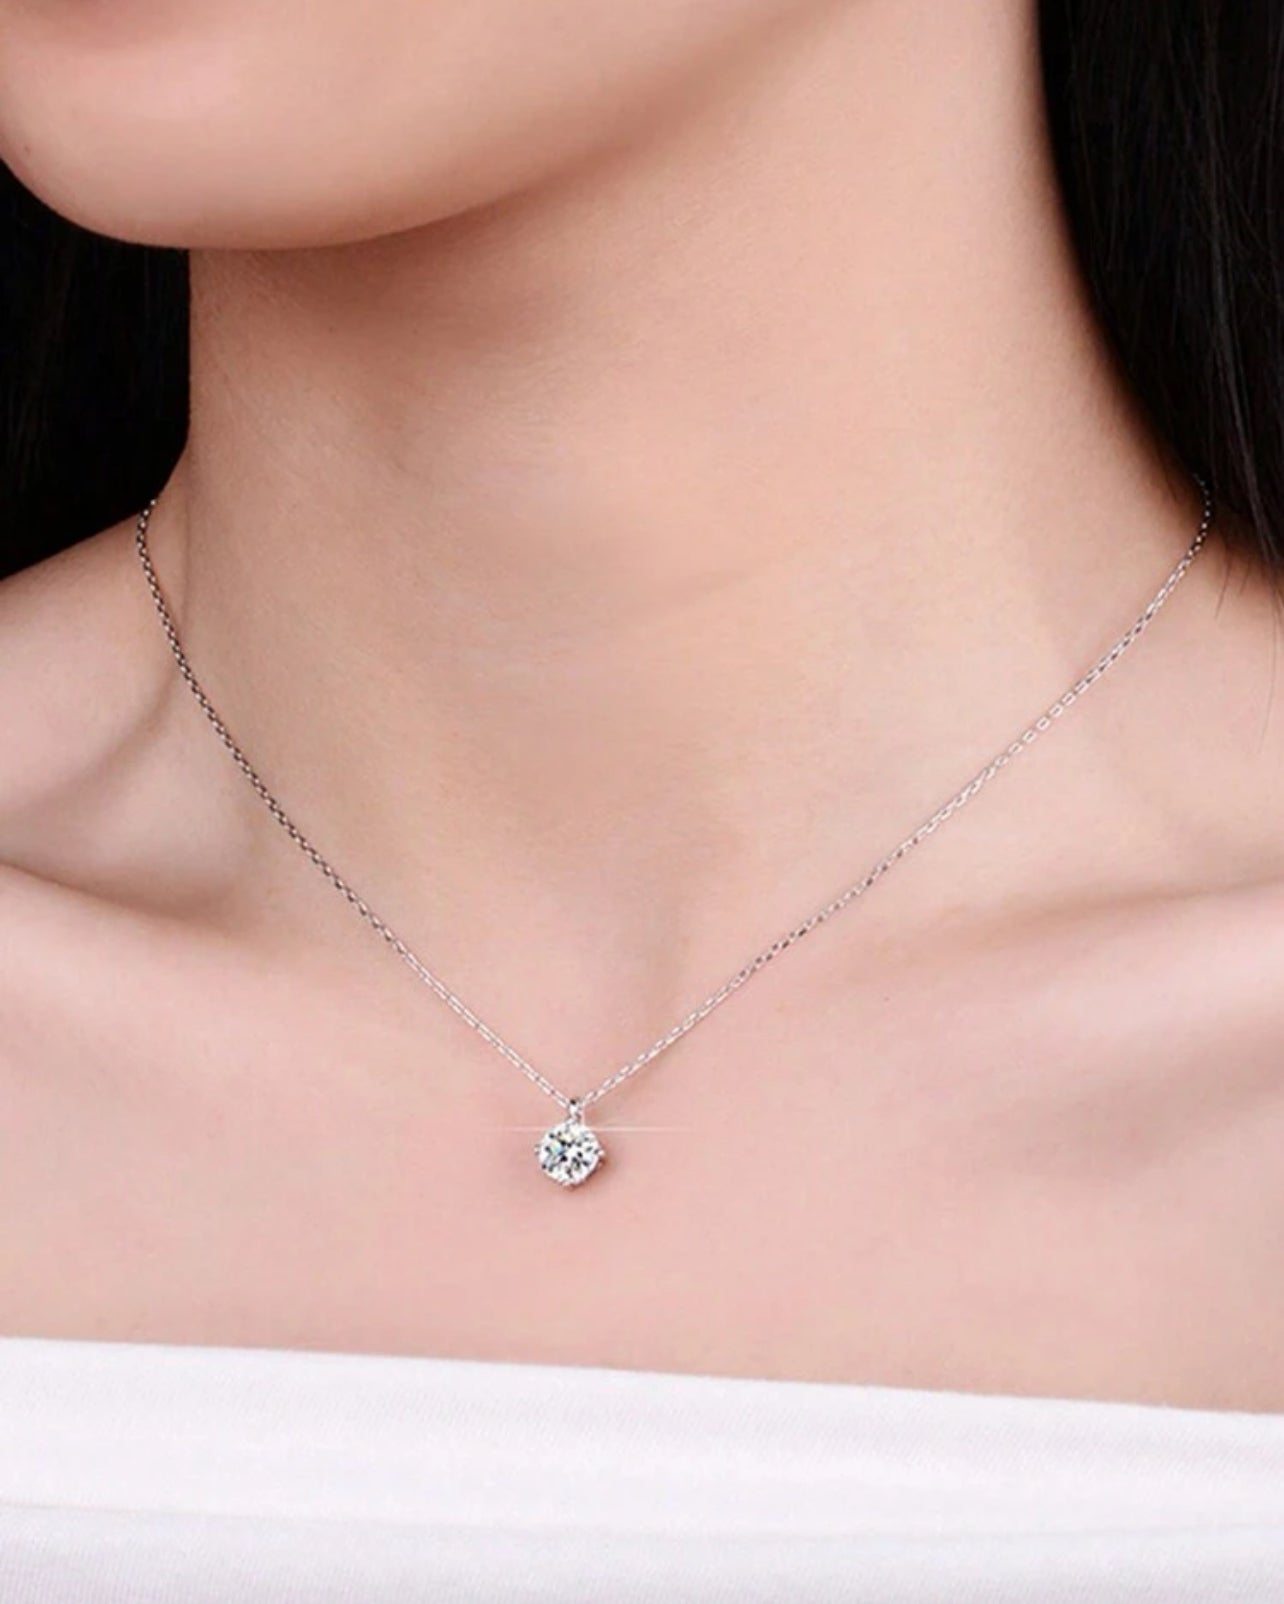 Orbit necklace - Silver